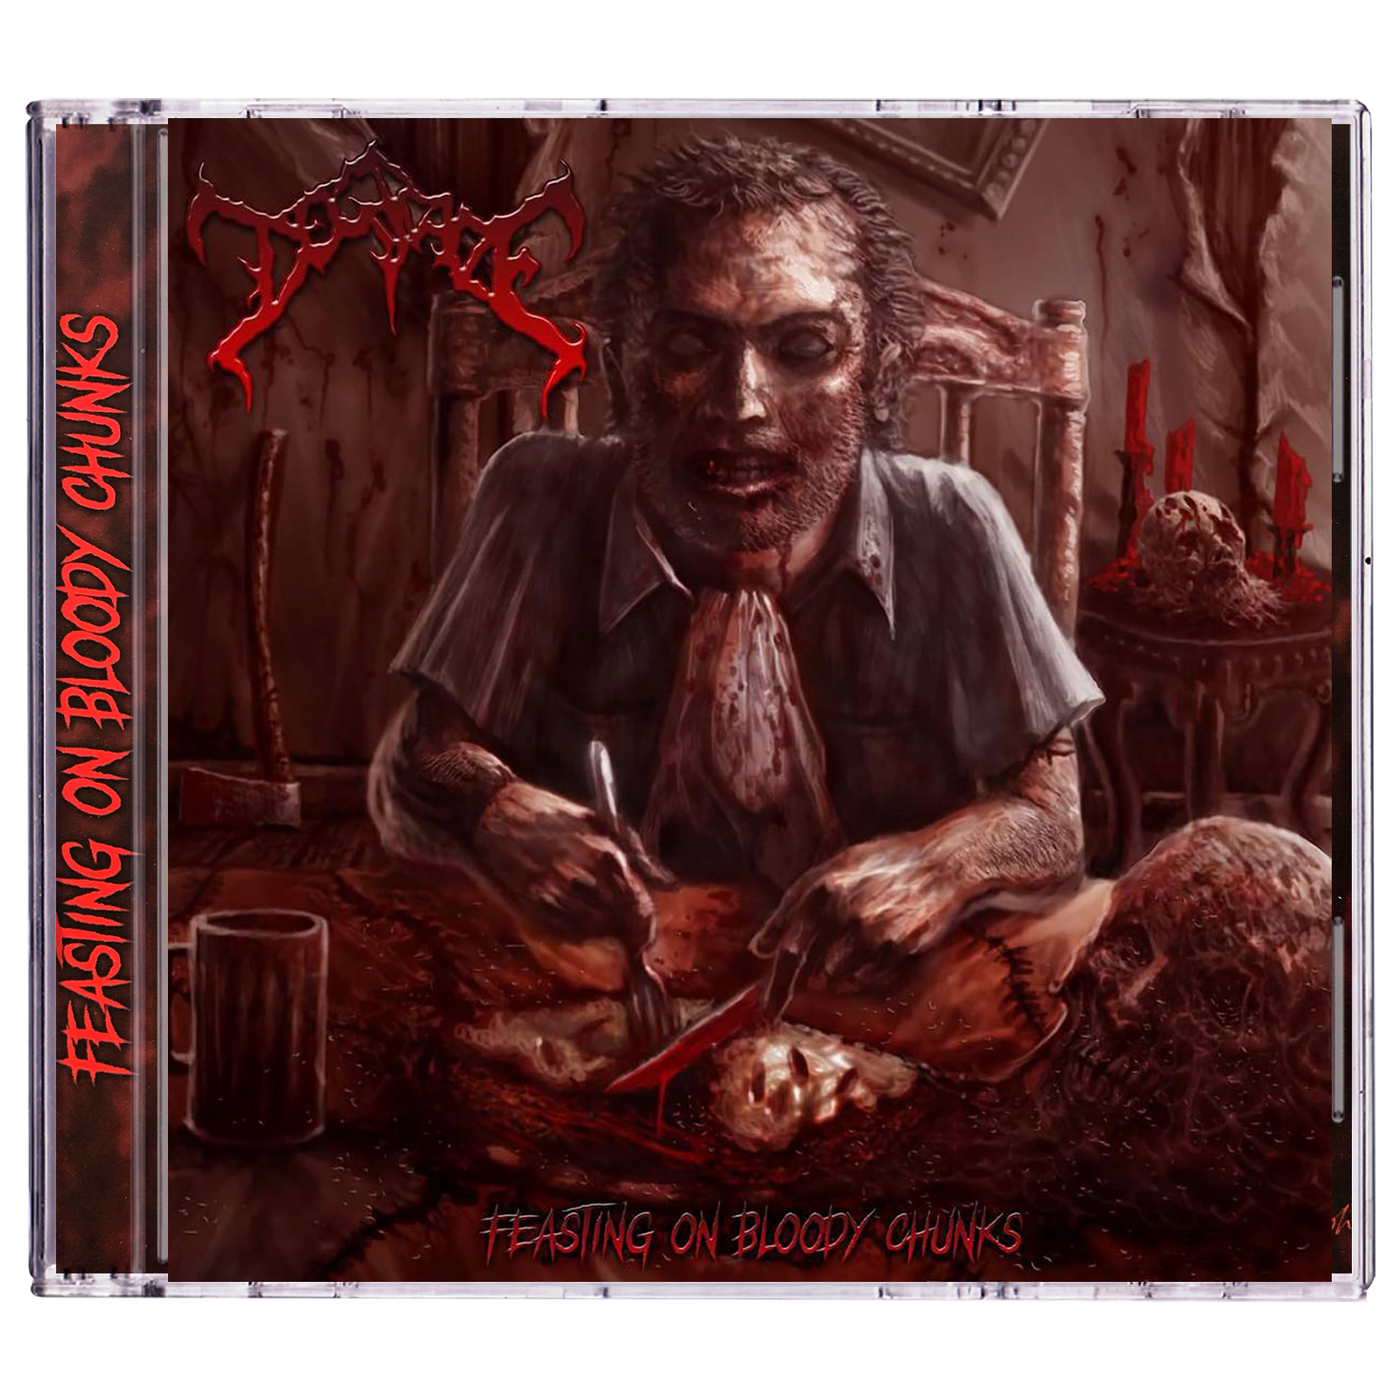 Degrade 'Feasting On Bloody Chunks' CD